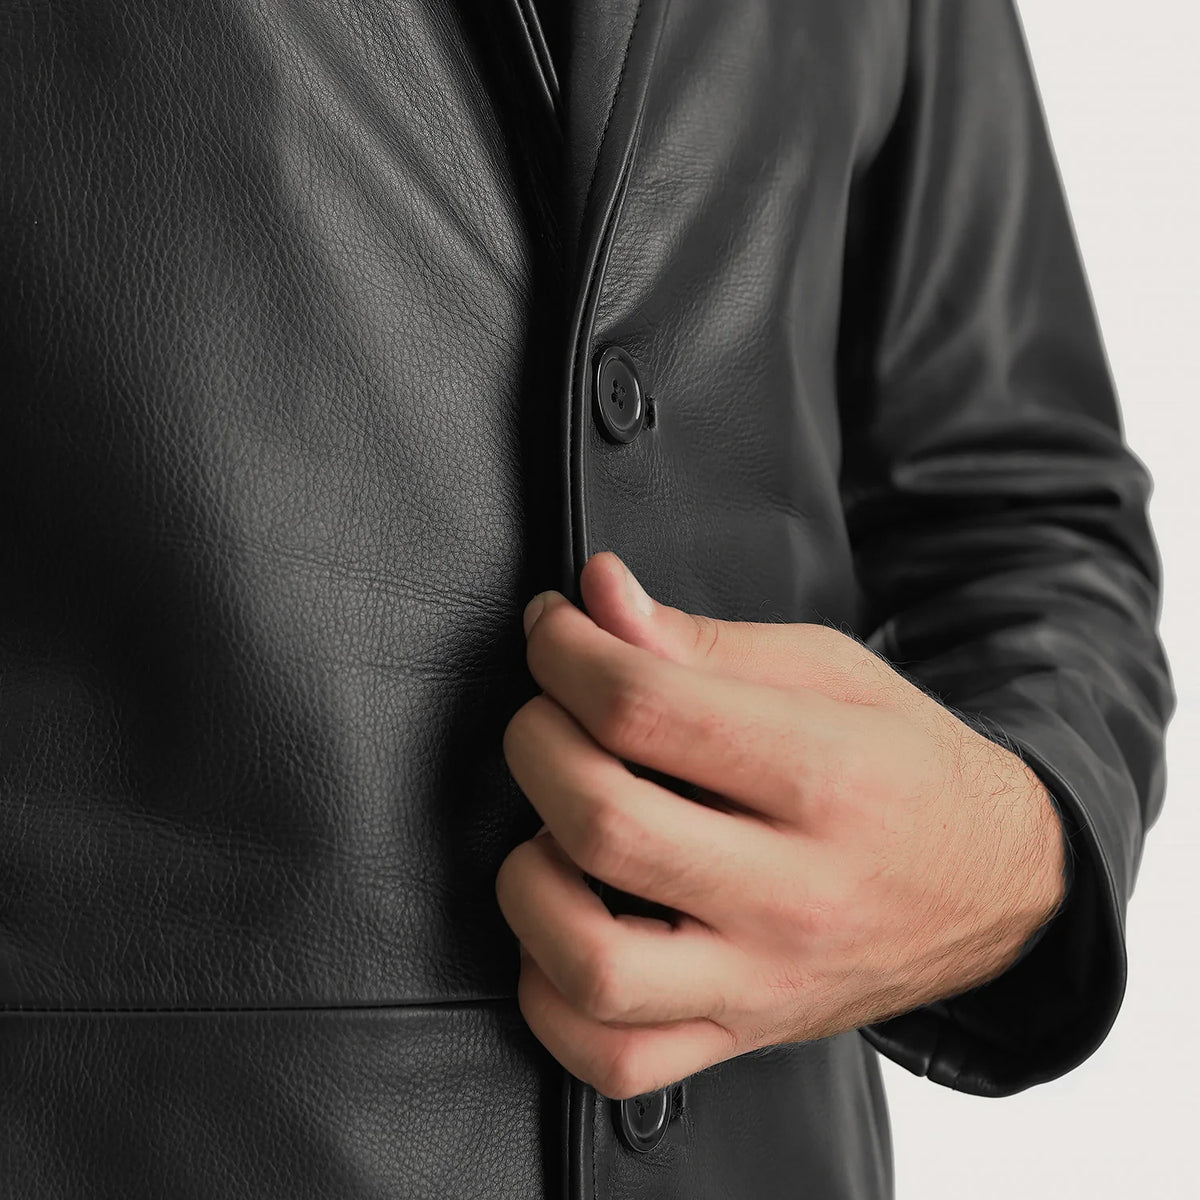 Mateo Black Leather Single Breasted Coat